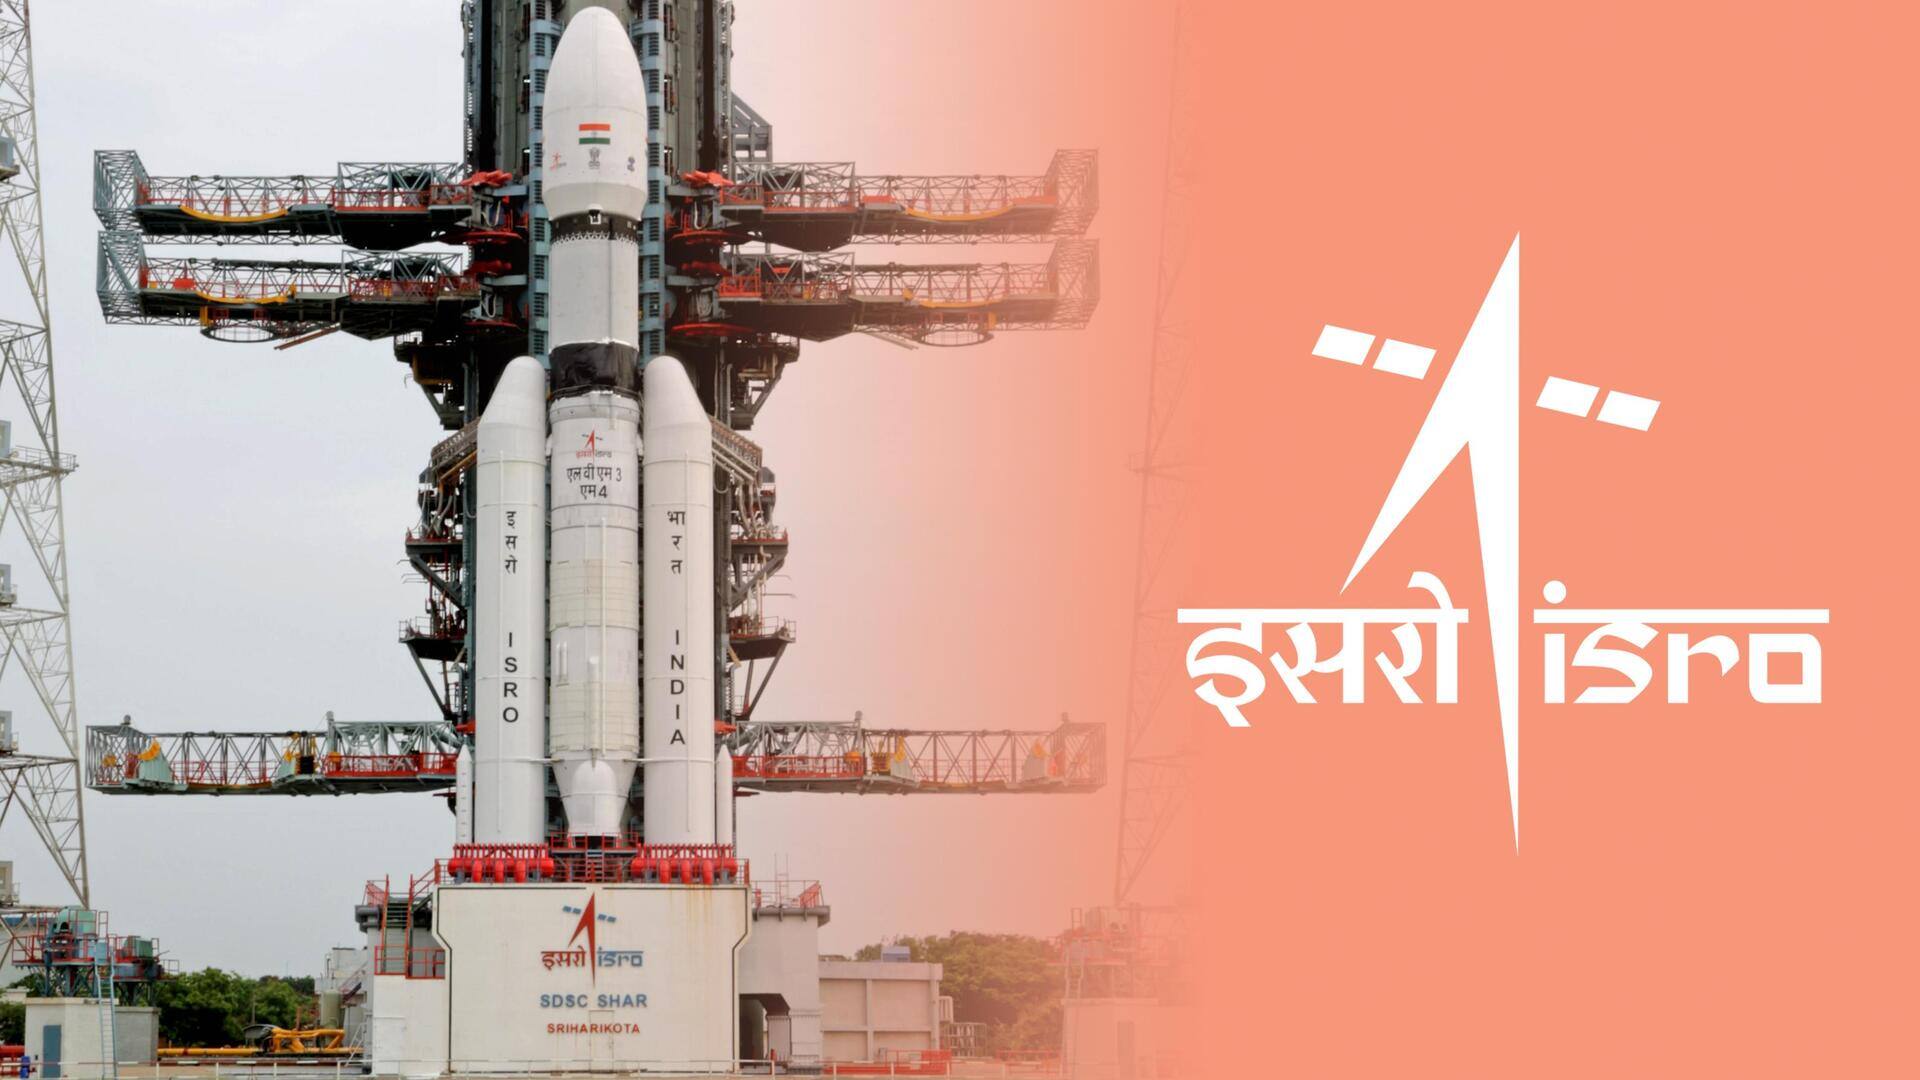 Chandrayaan-3: ISRO to perform deboost maneuver on lander module today